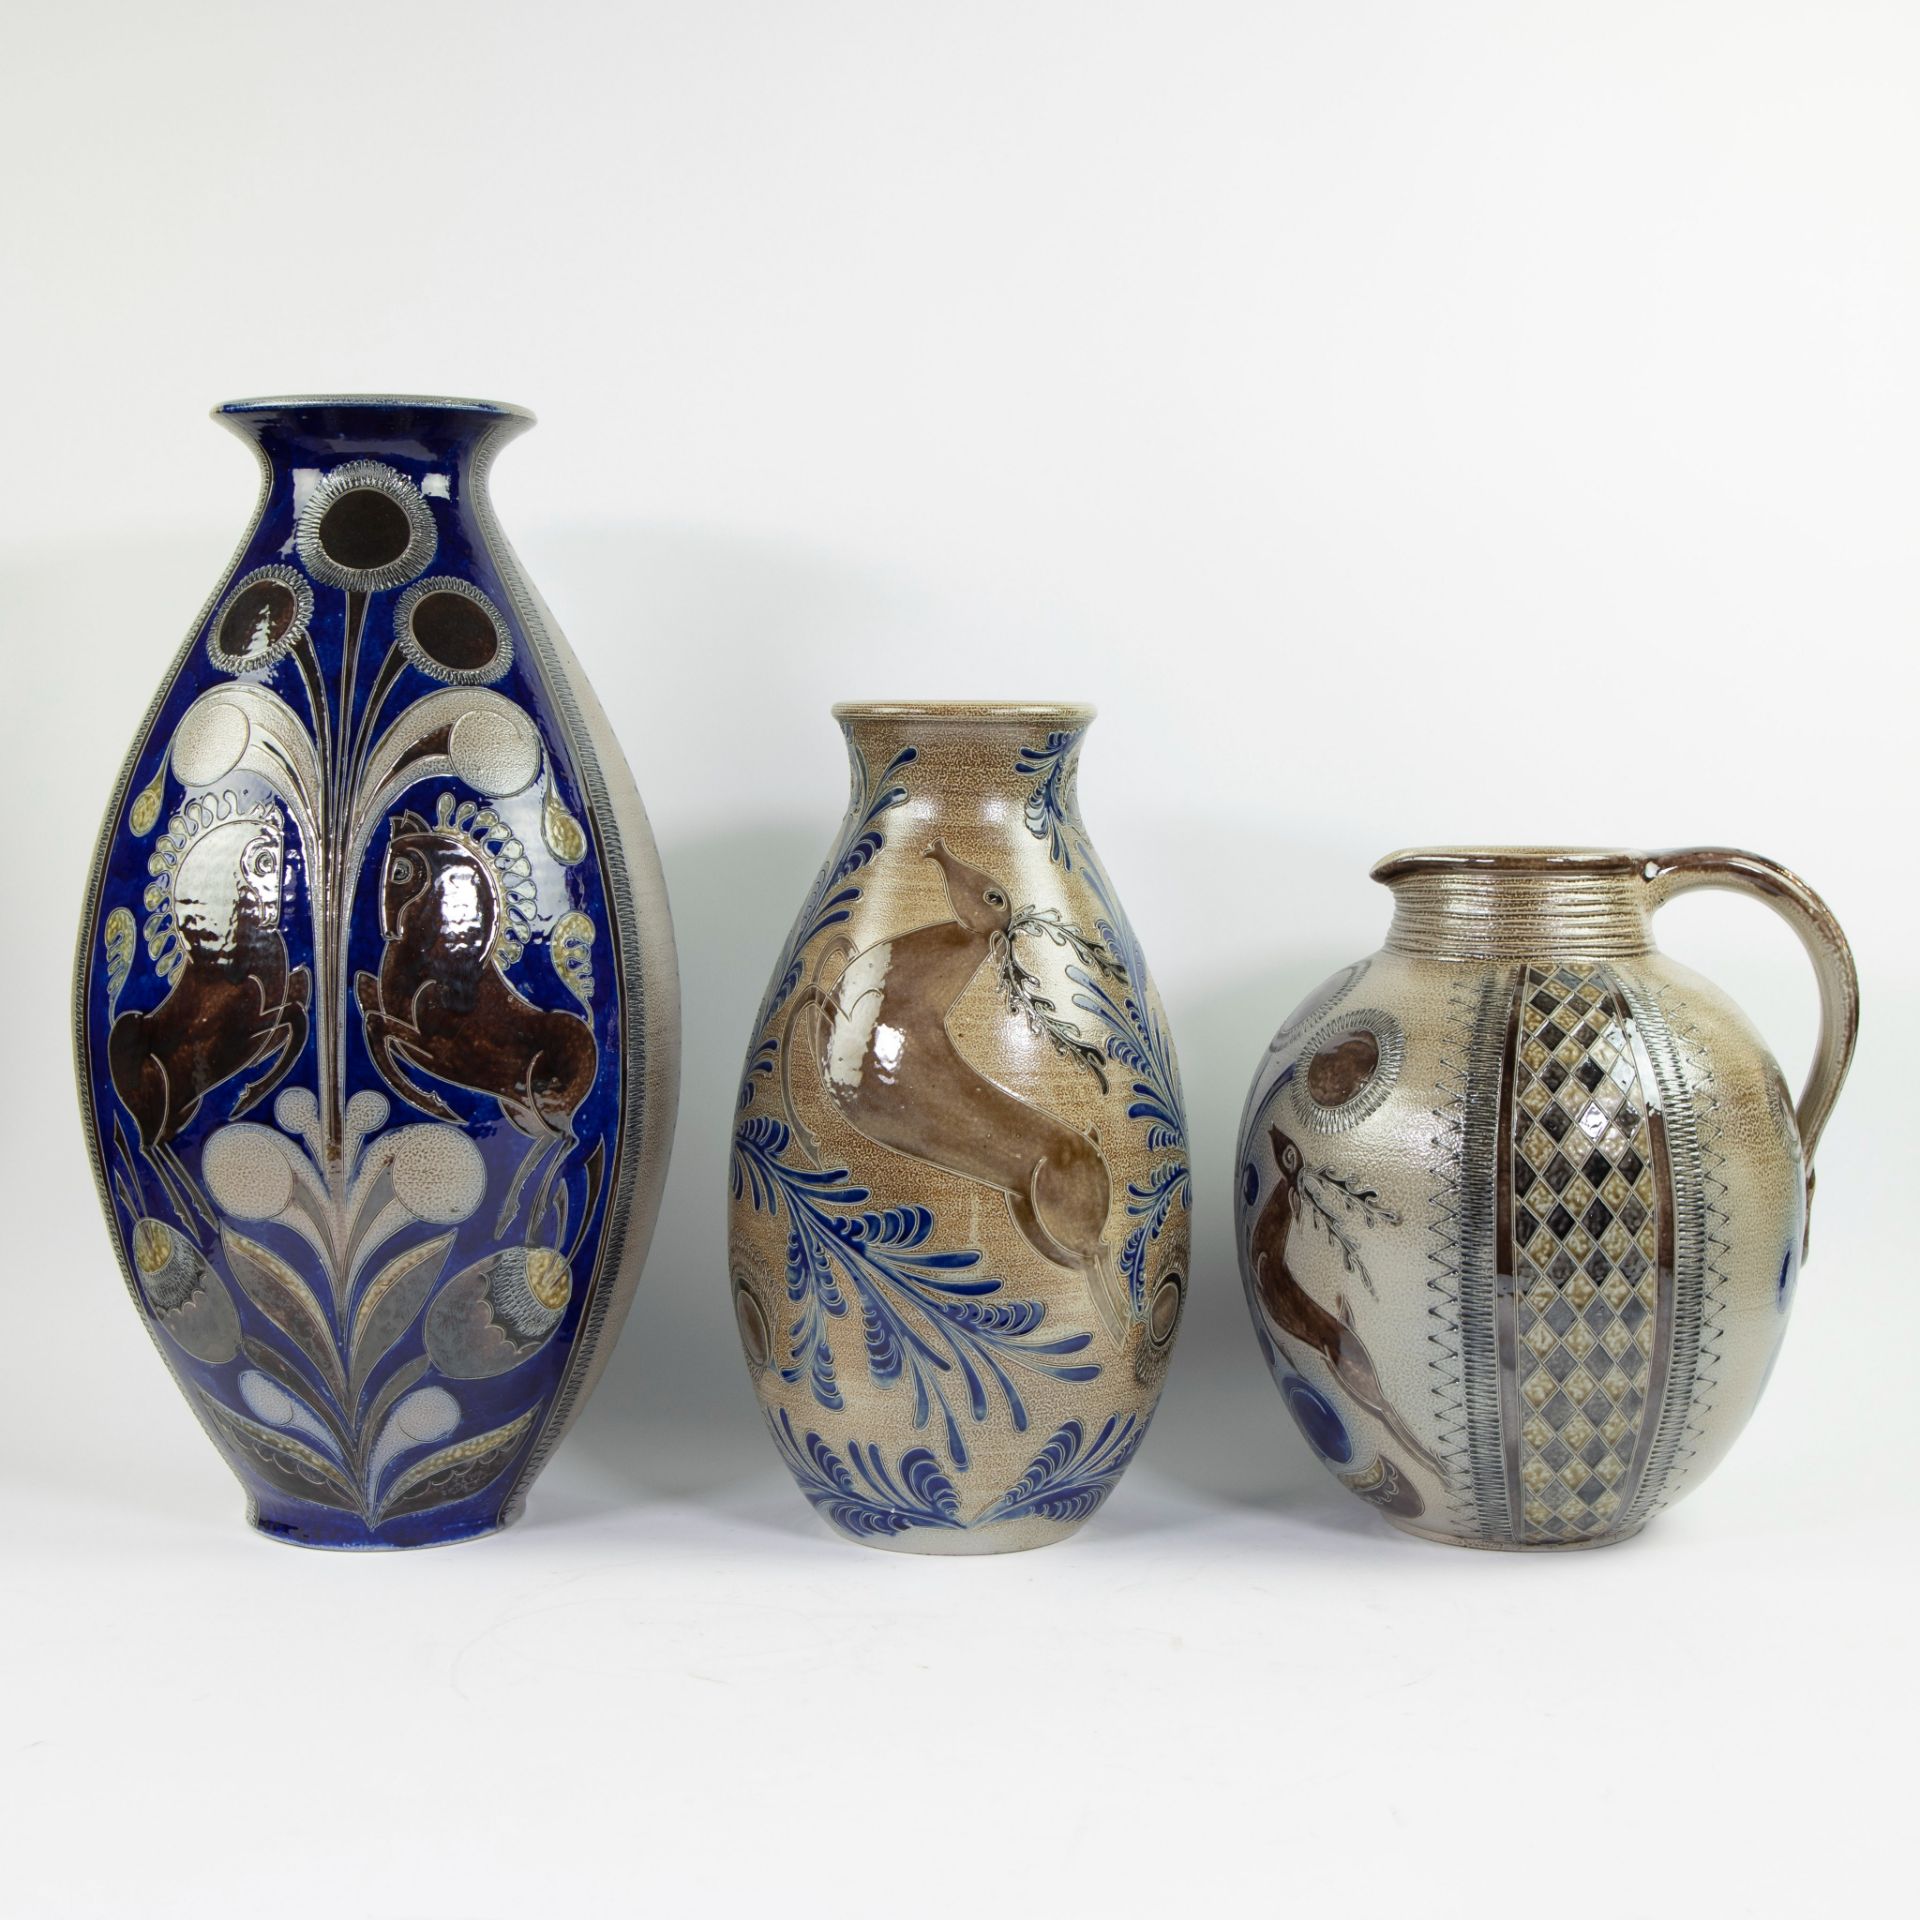 Mid-century ceramic jug and 2 vases, made of stoneware, Germany, 2 marked